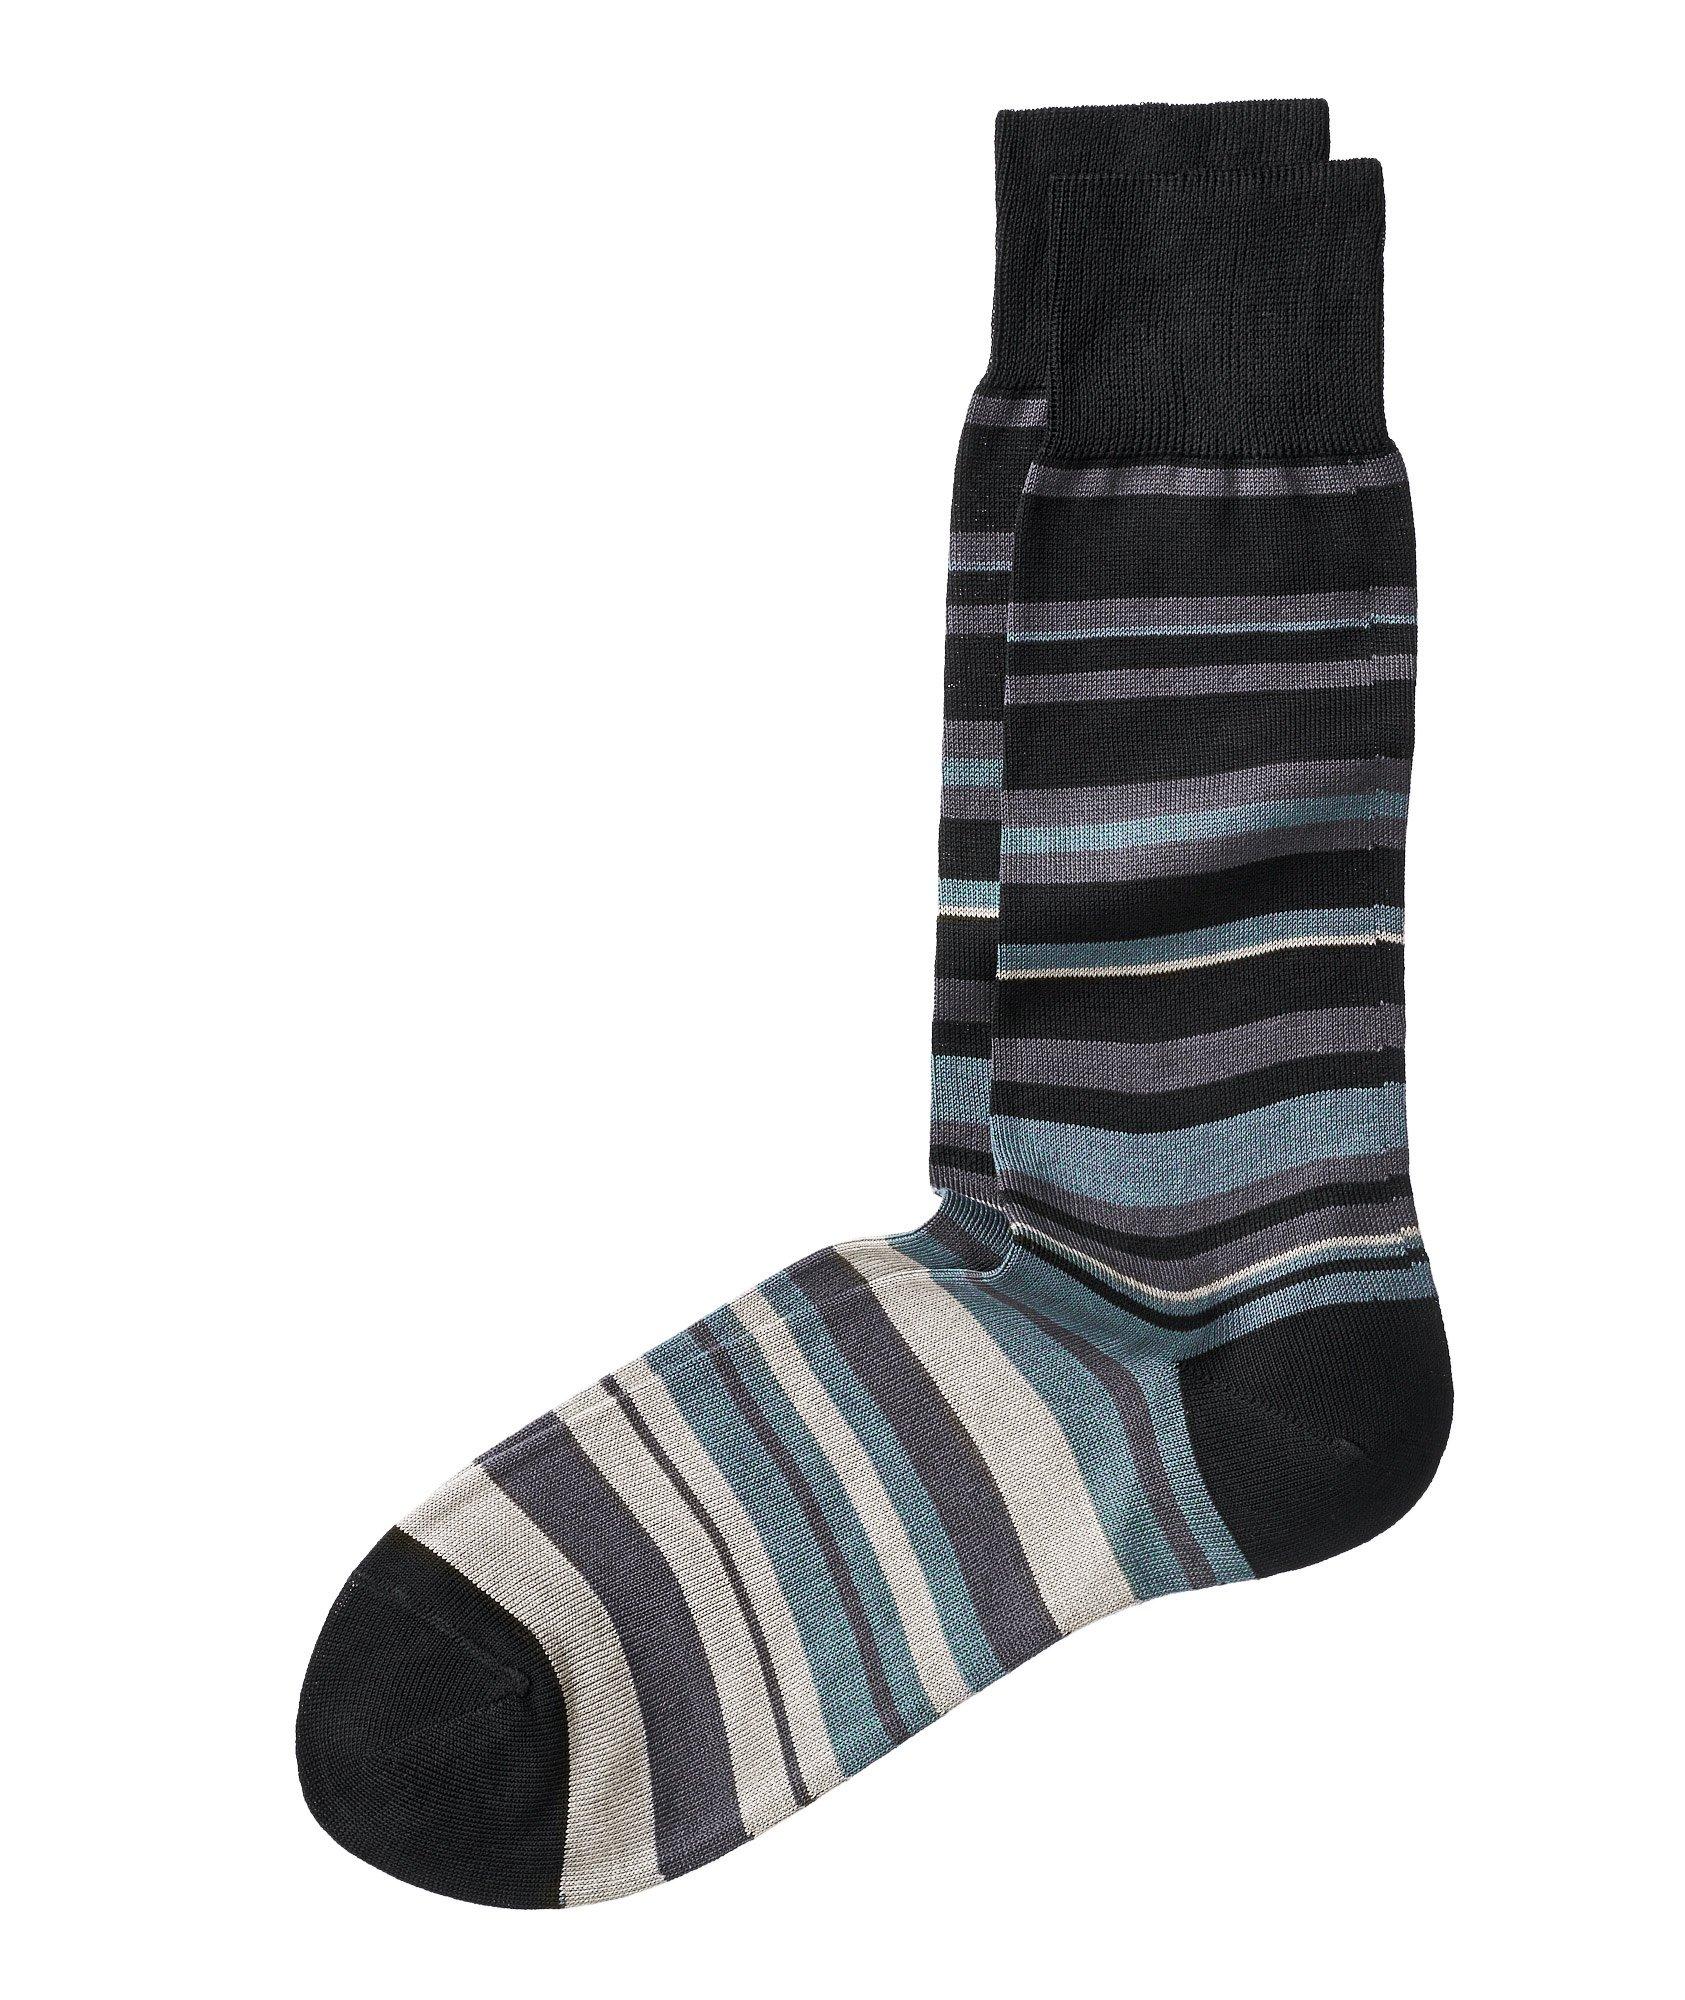 Striped Mercerized Cotton-Blend Socks image 0